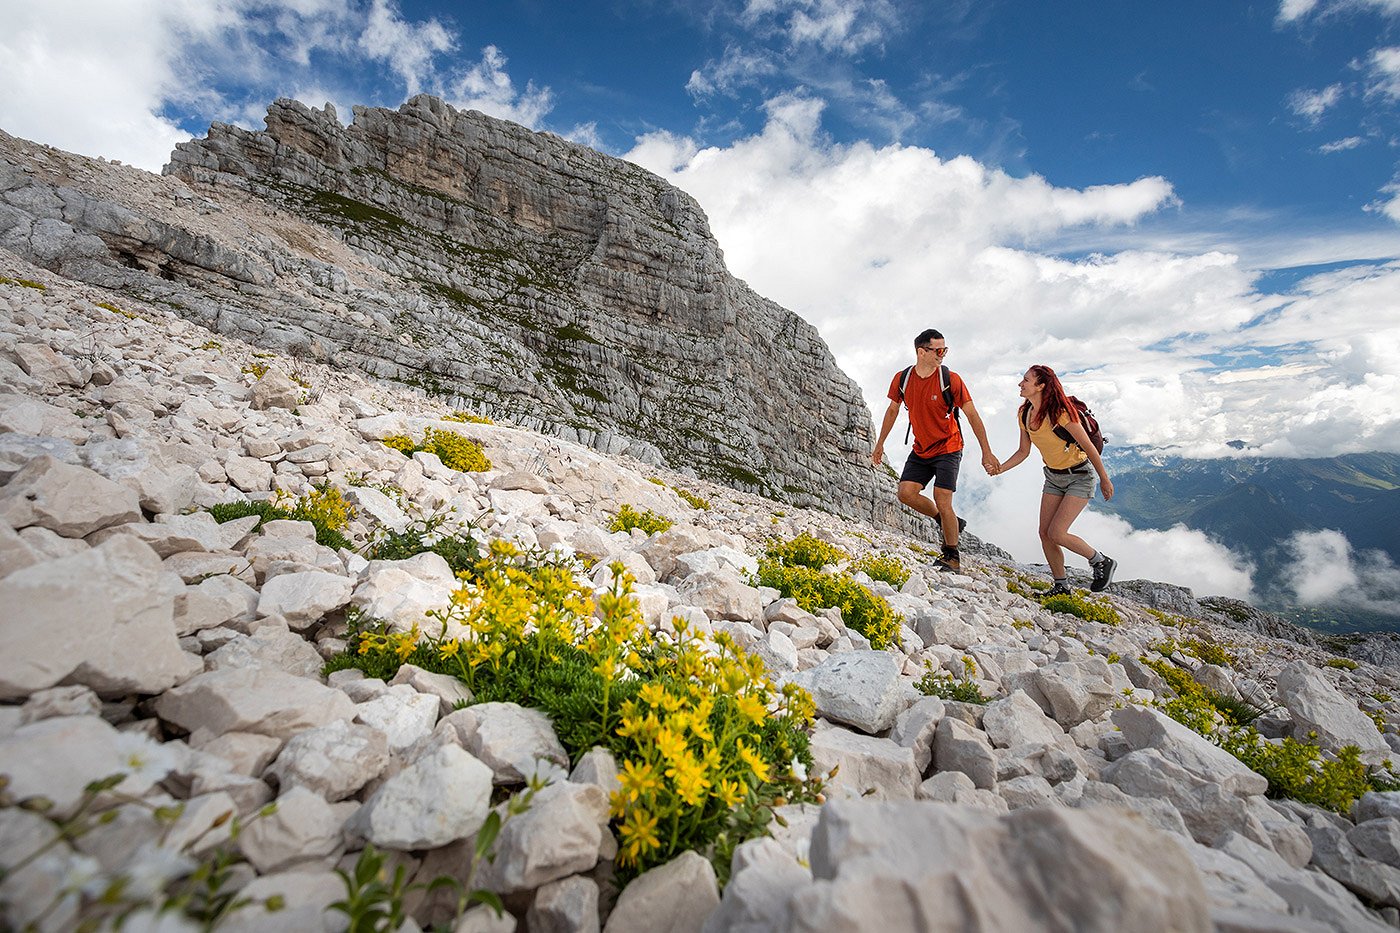 The couple enjoys a walk along the mountain flowers on Kanin